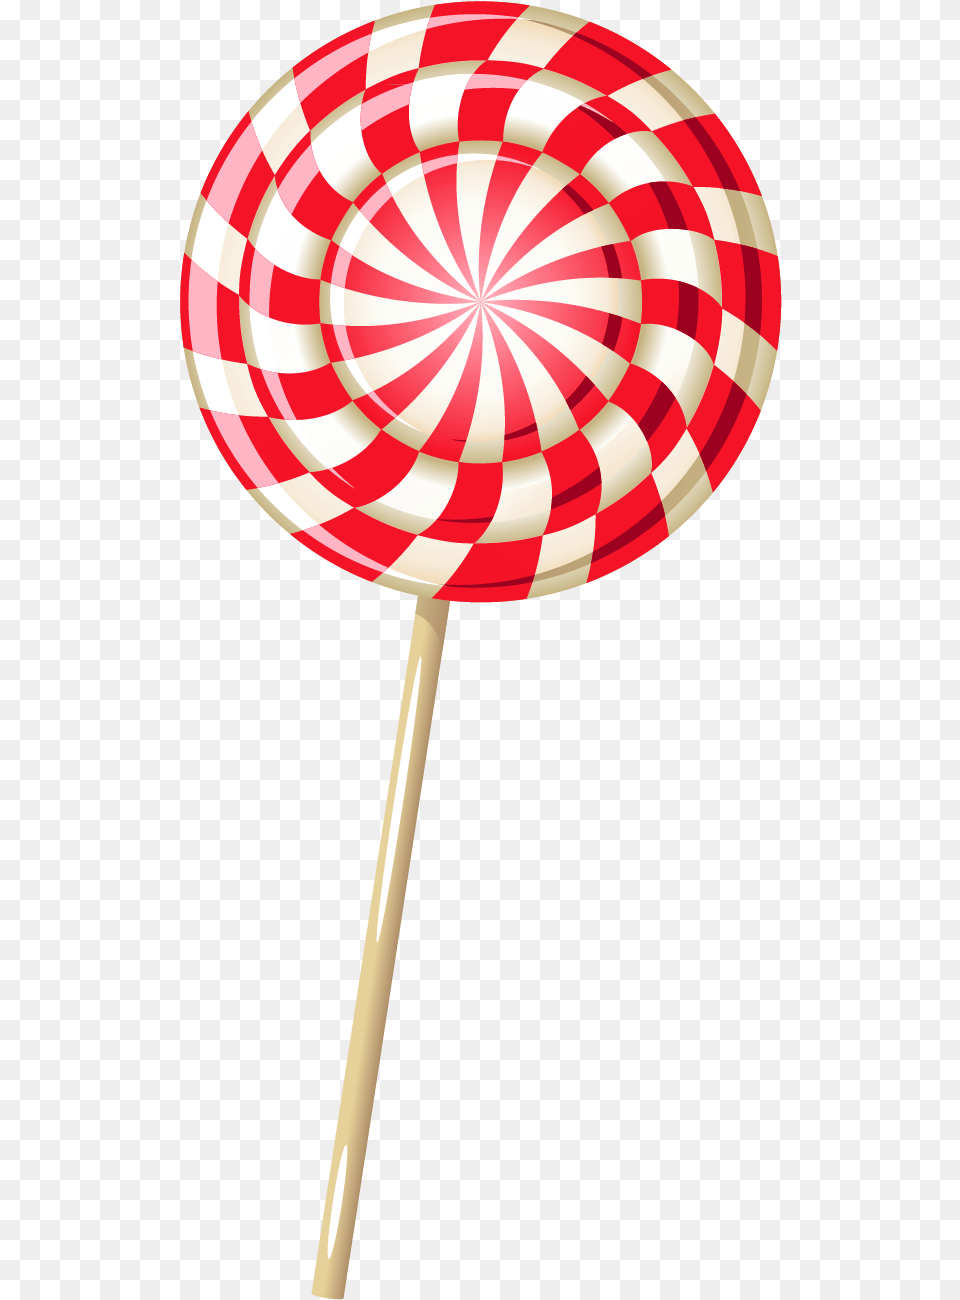 Lollipop Single Large Lollipop, Candy, Food, Sweets Free Png